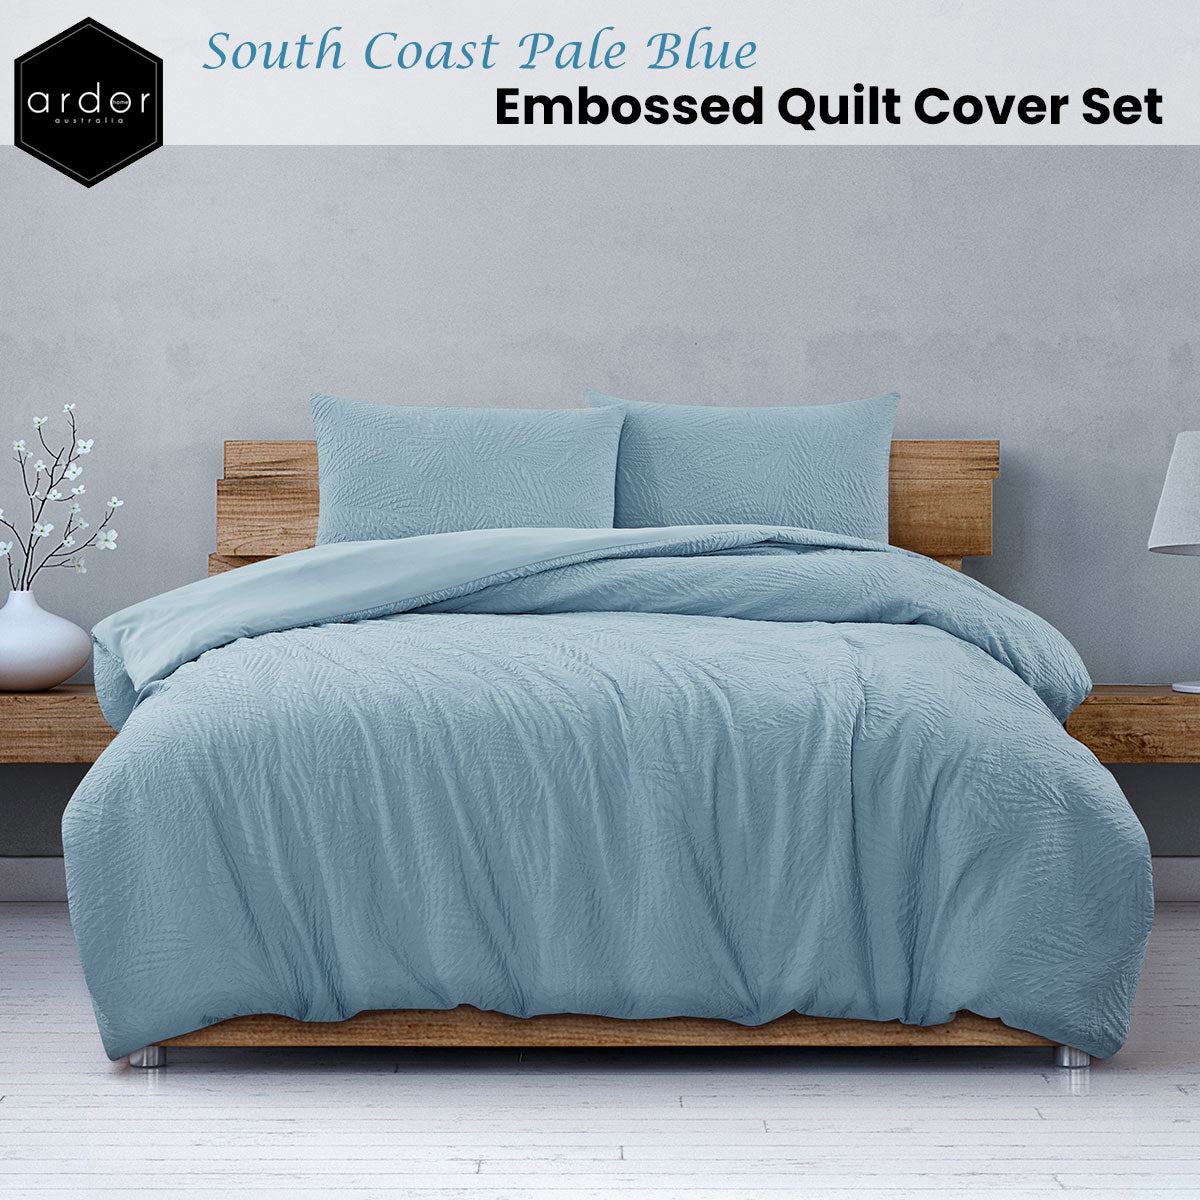 Ardor South Coast Pale Blue Embossed King Quilt Cover Set